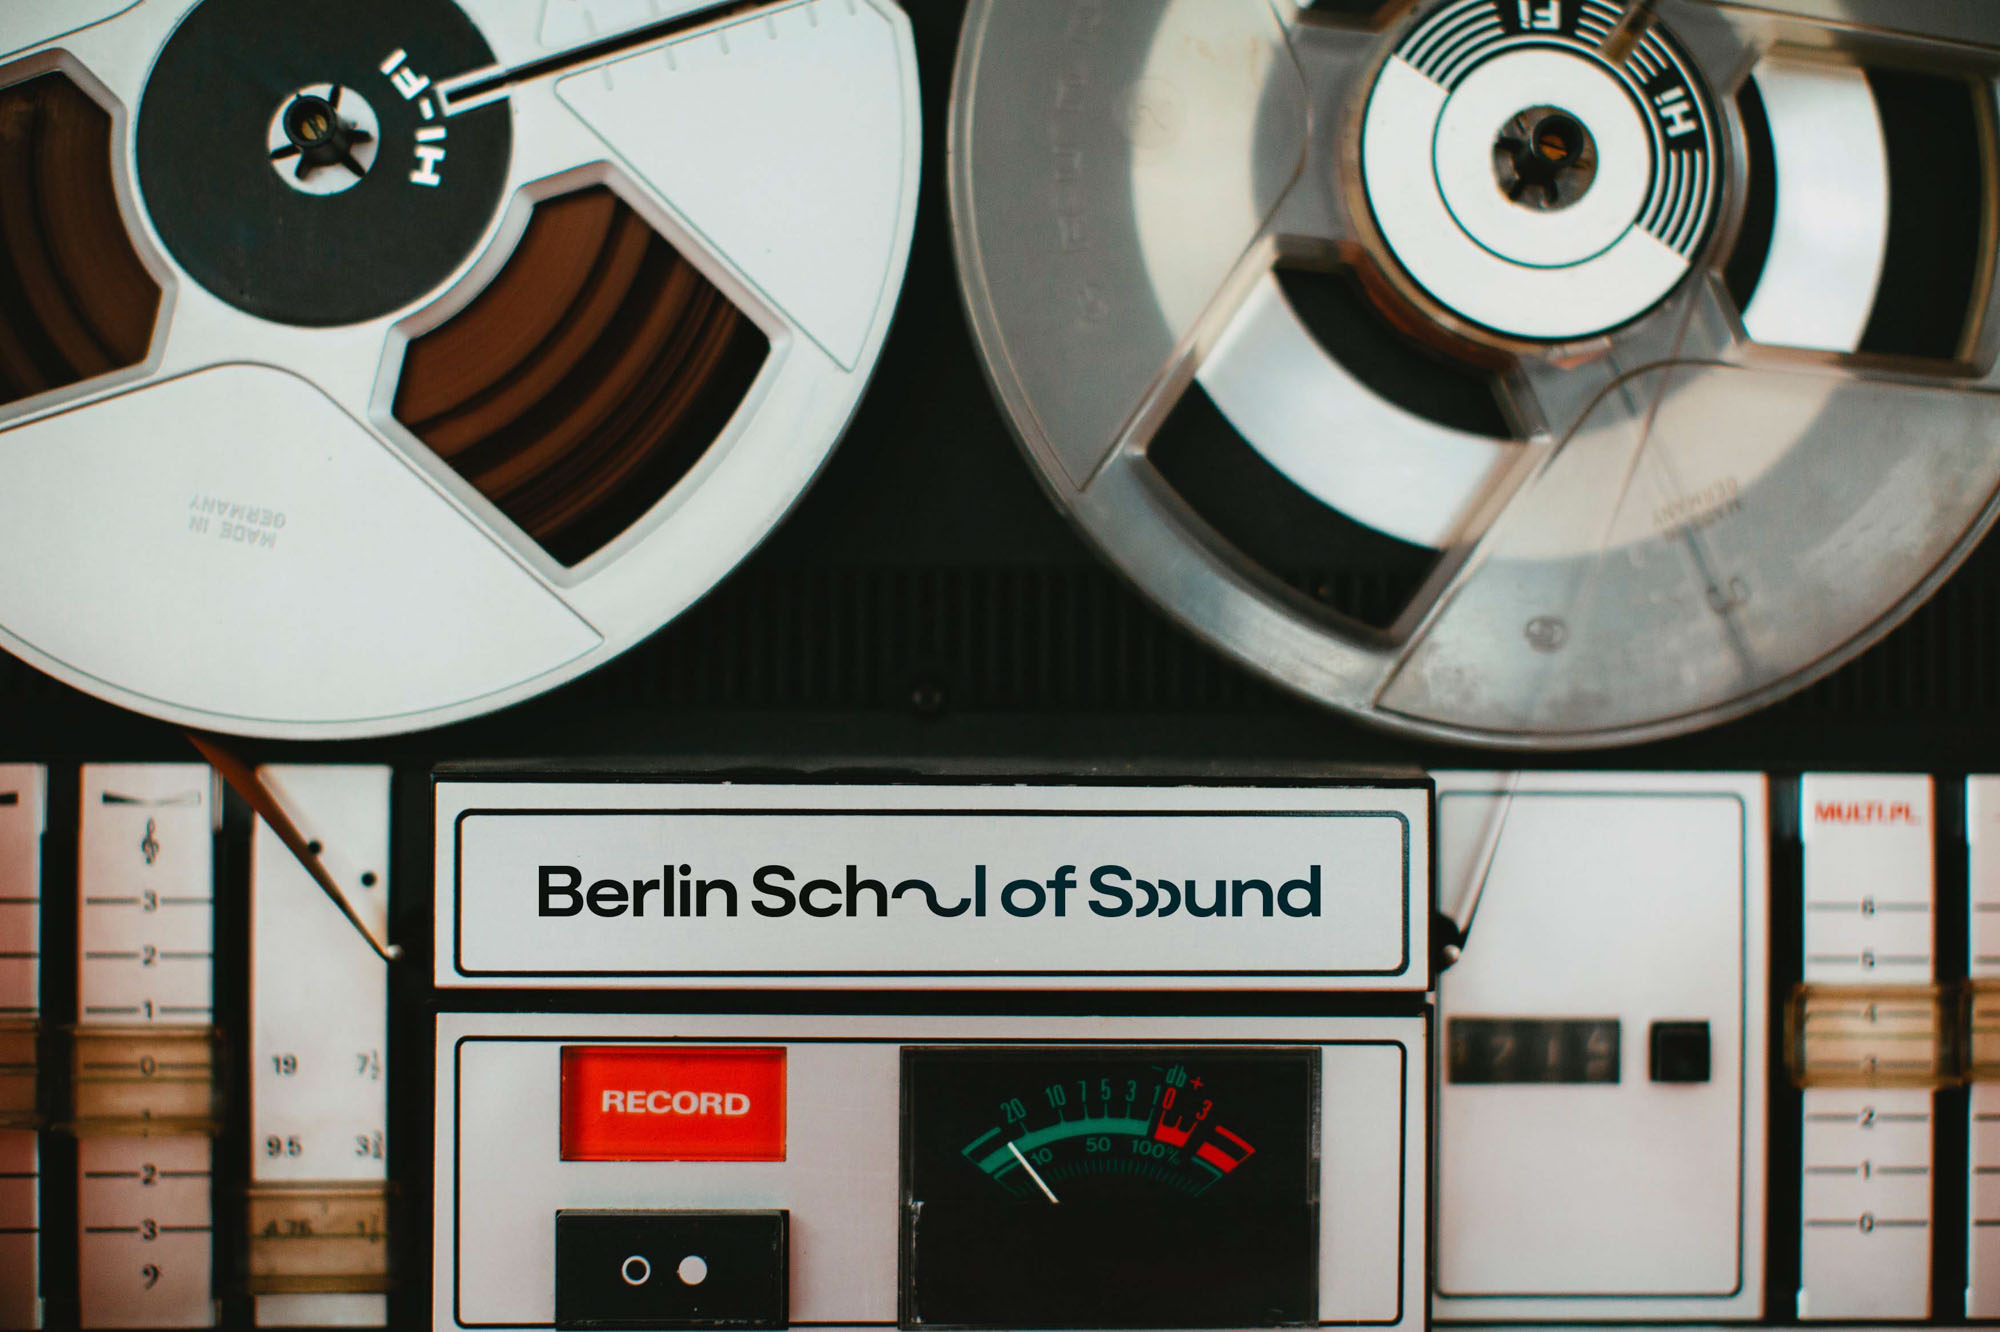 Berlin School of Sound mockup vintage tape recorder